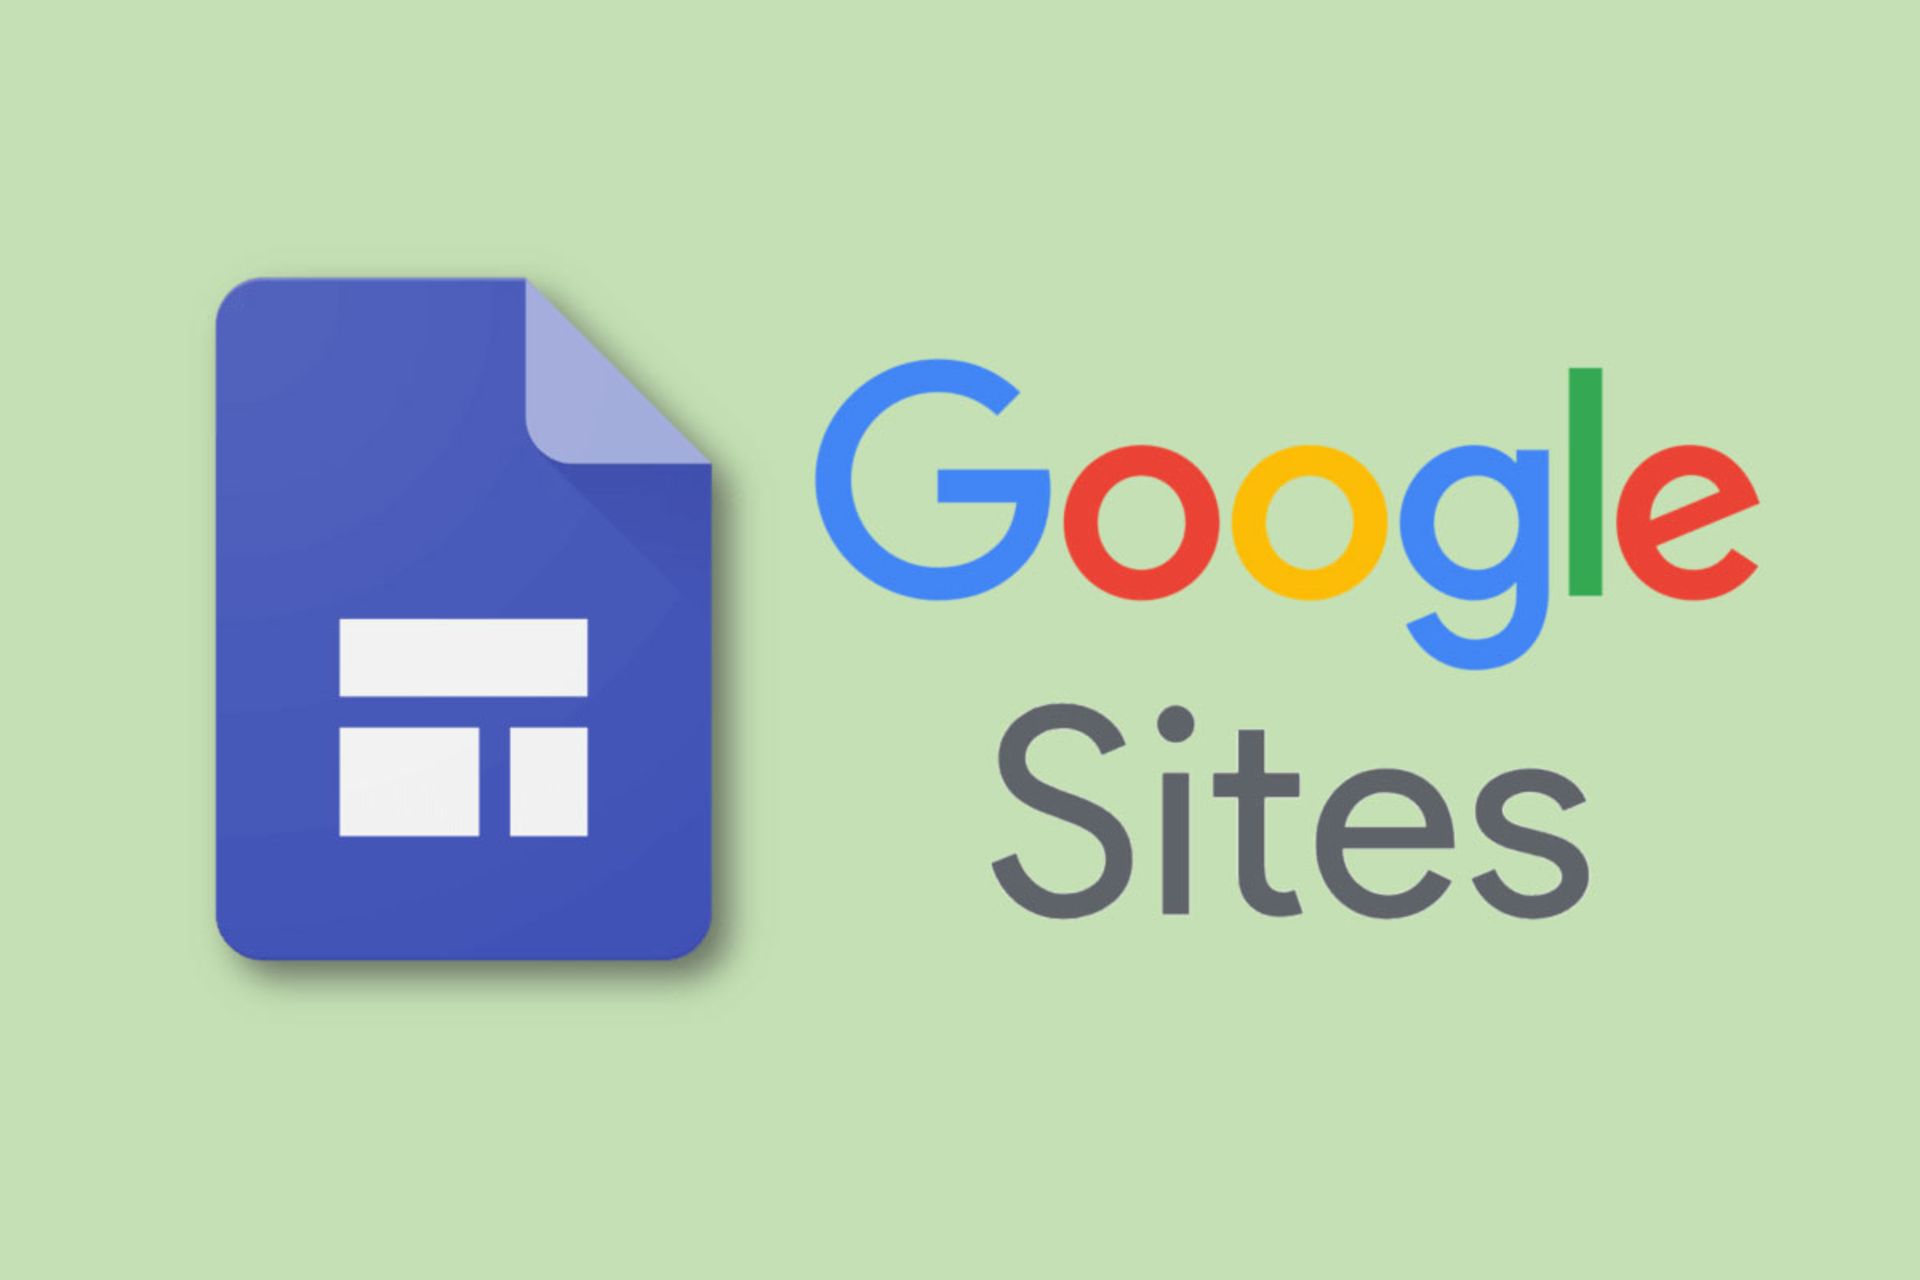 لوگو Google Sites